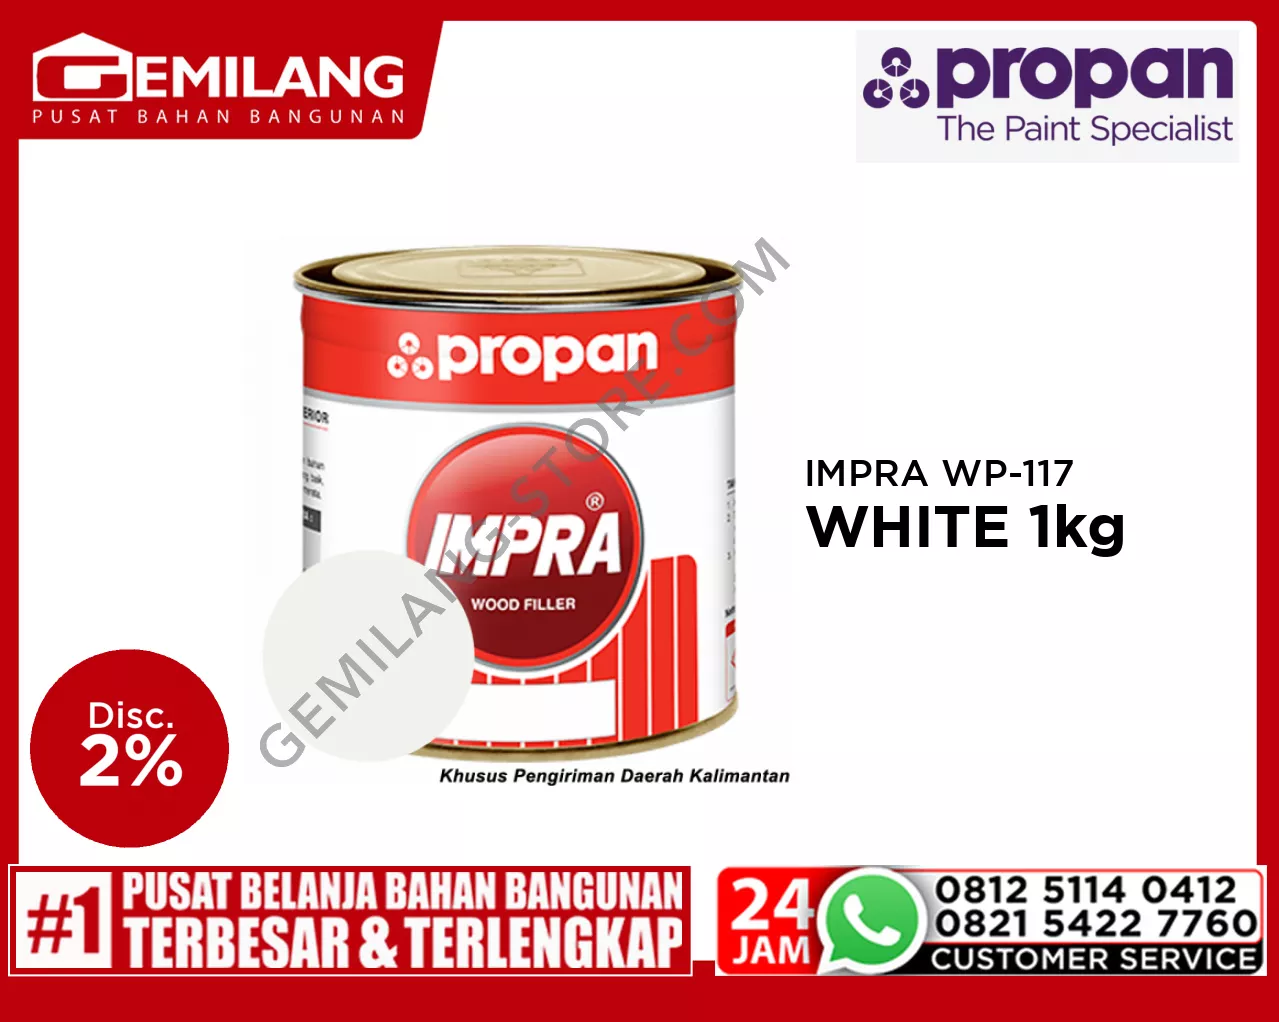 IMPRA WP-117 WHITE 1kg